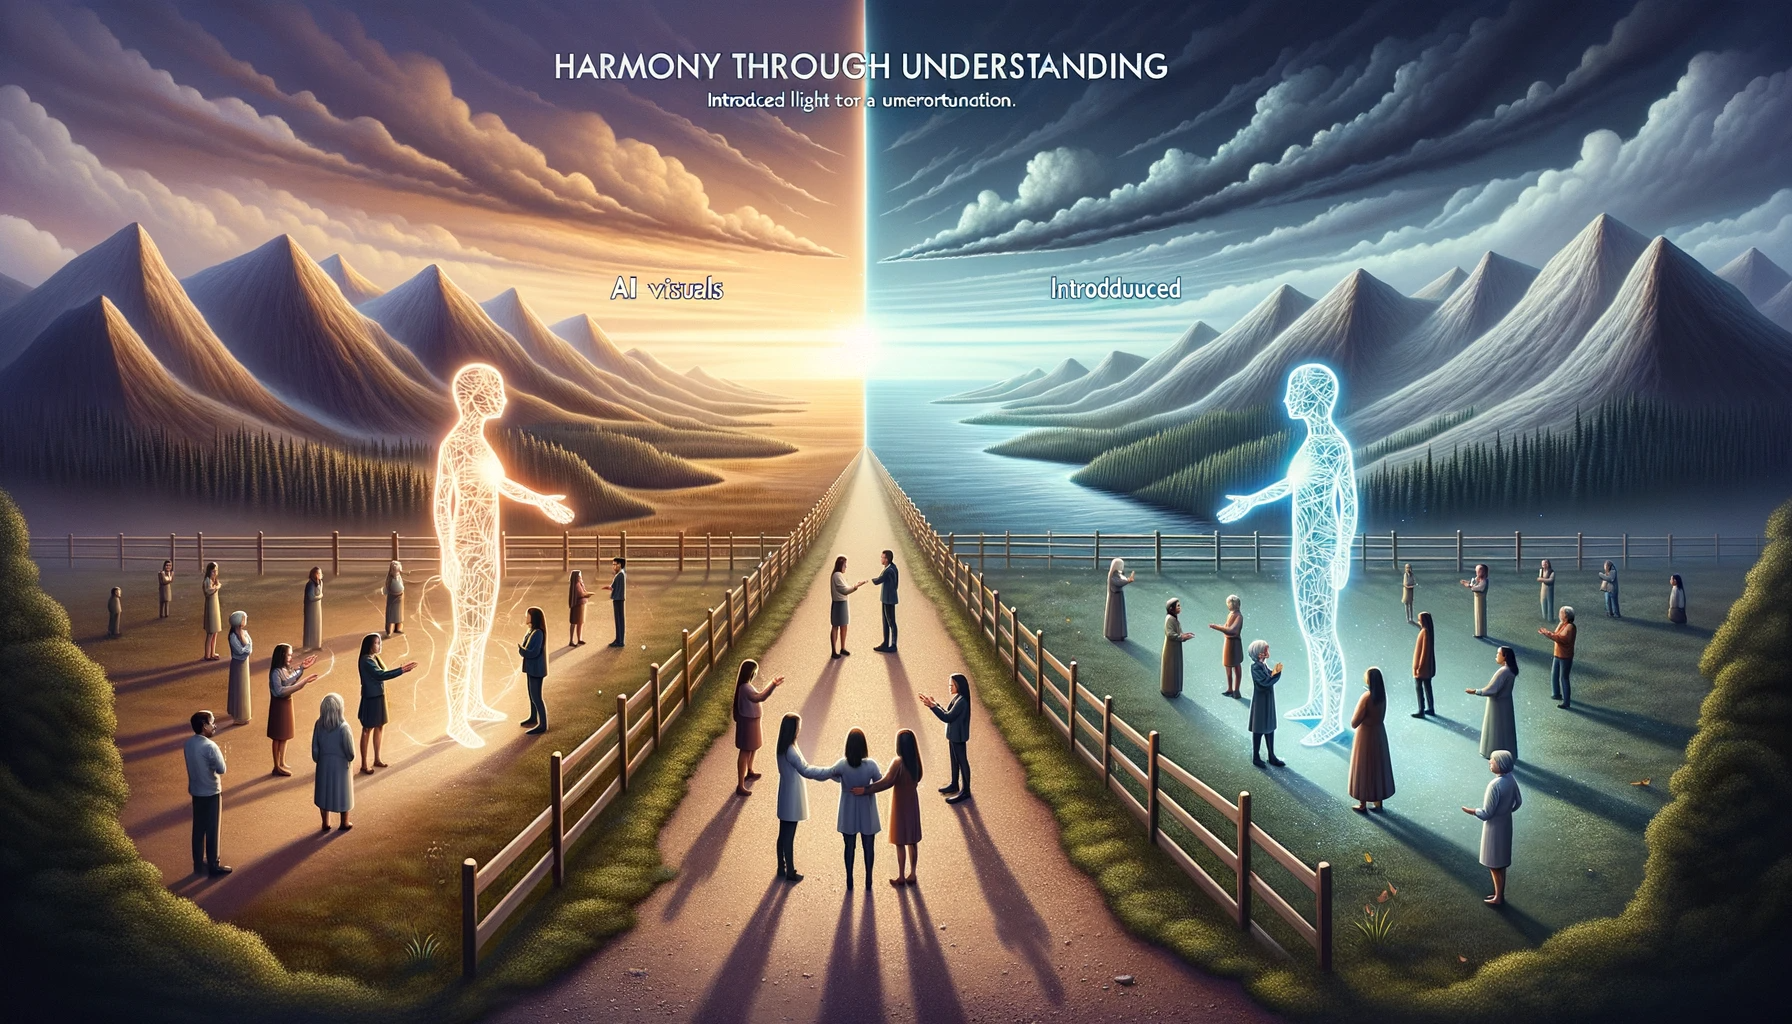 Wendy Kier, AI Art infographic 'Harmony through Understanding